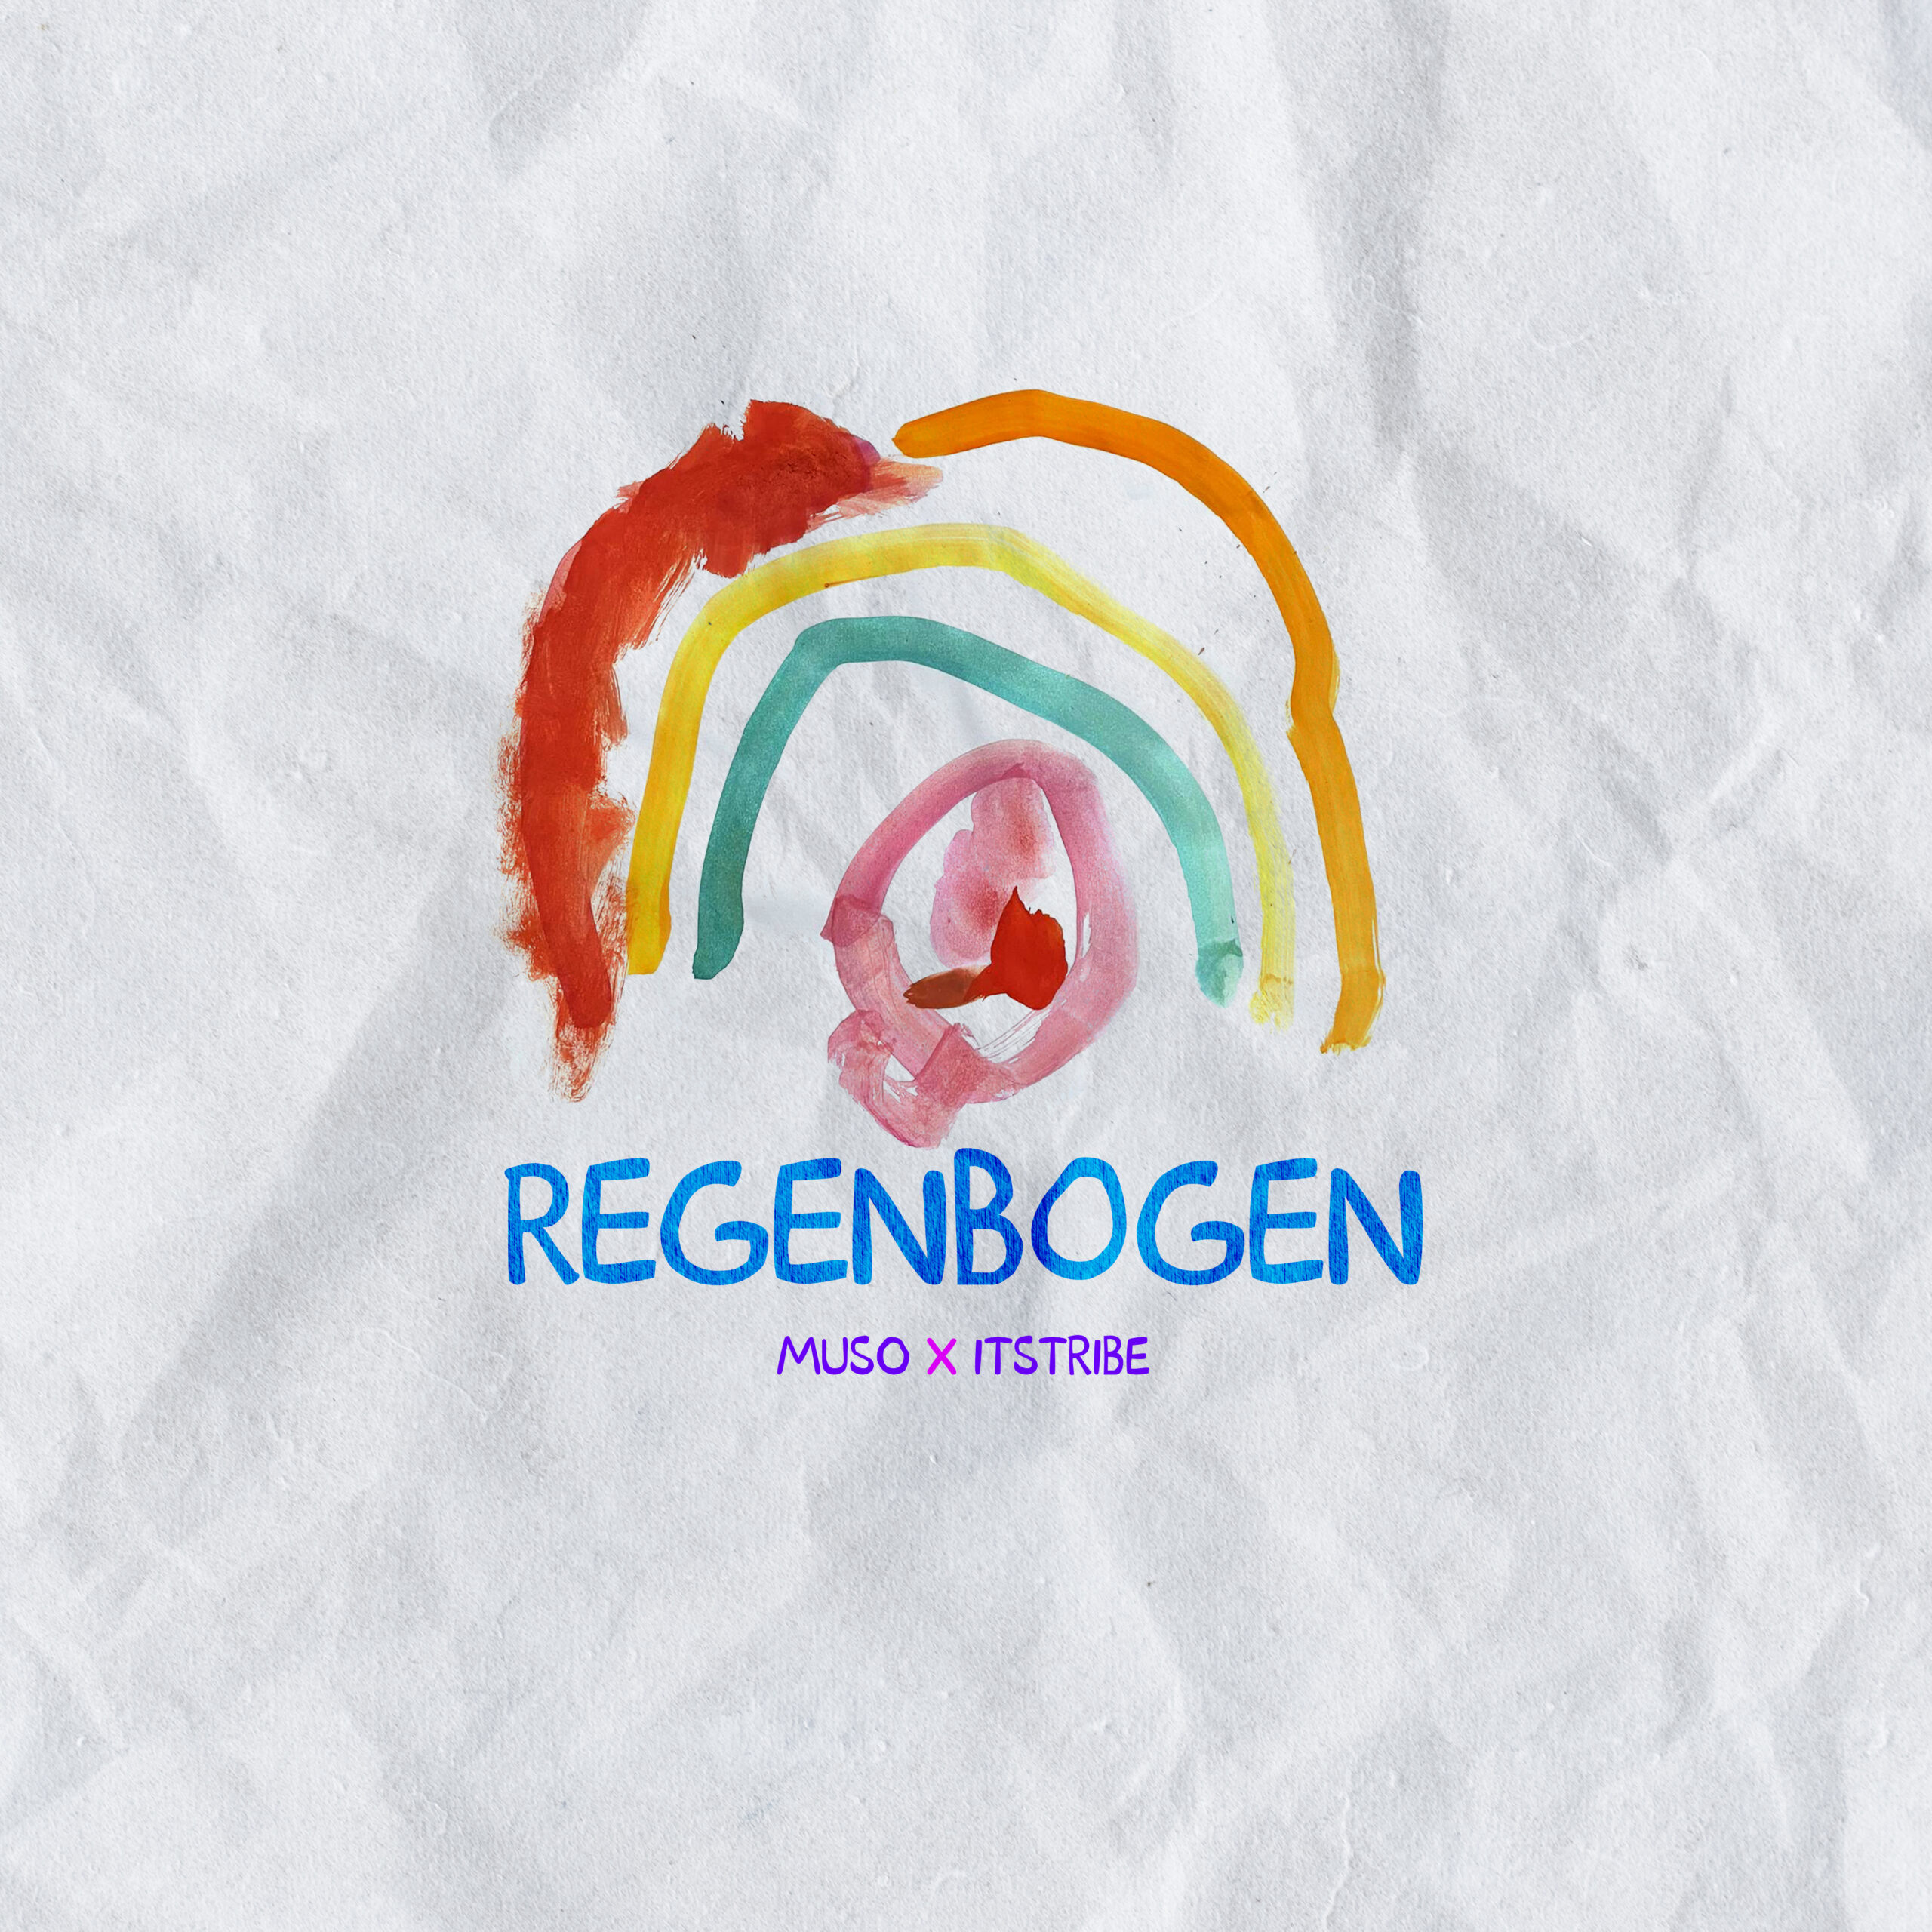 Regenbogen Coverart Single itstribe Muso